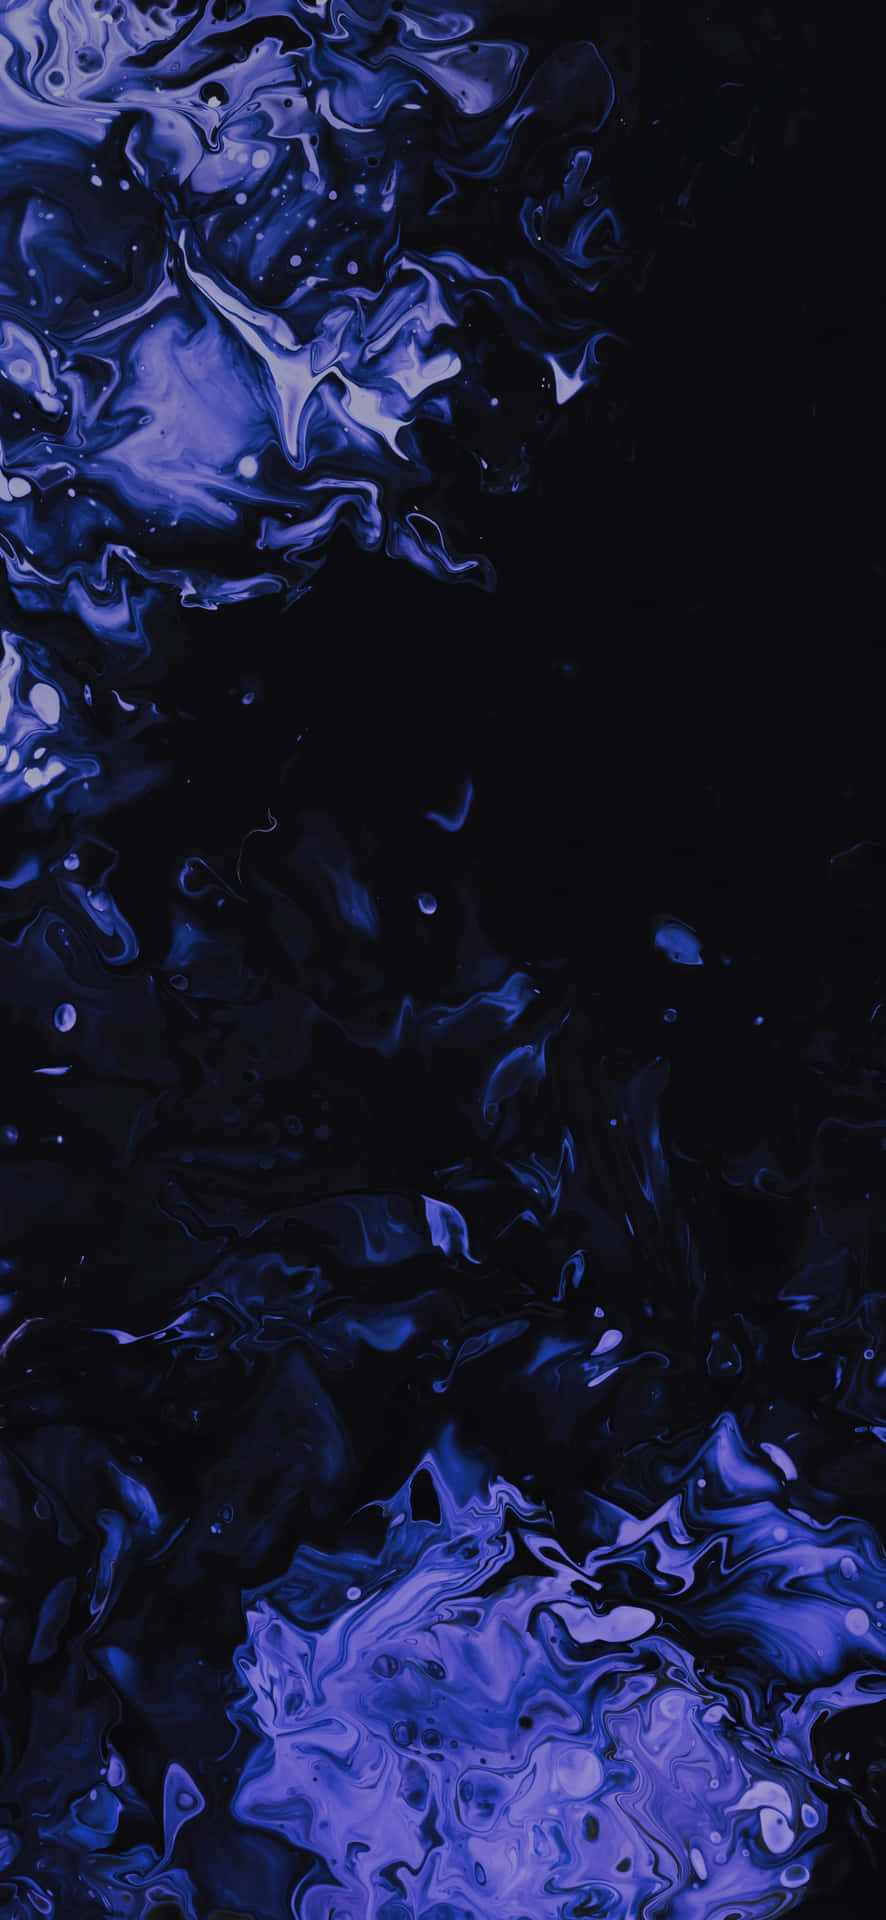 Abstract Blue Black Water Ripples Aesthetic.jpg Wallpaper